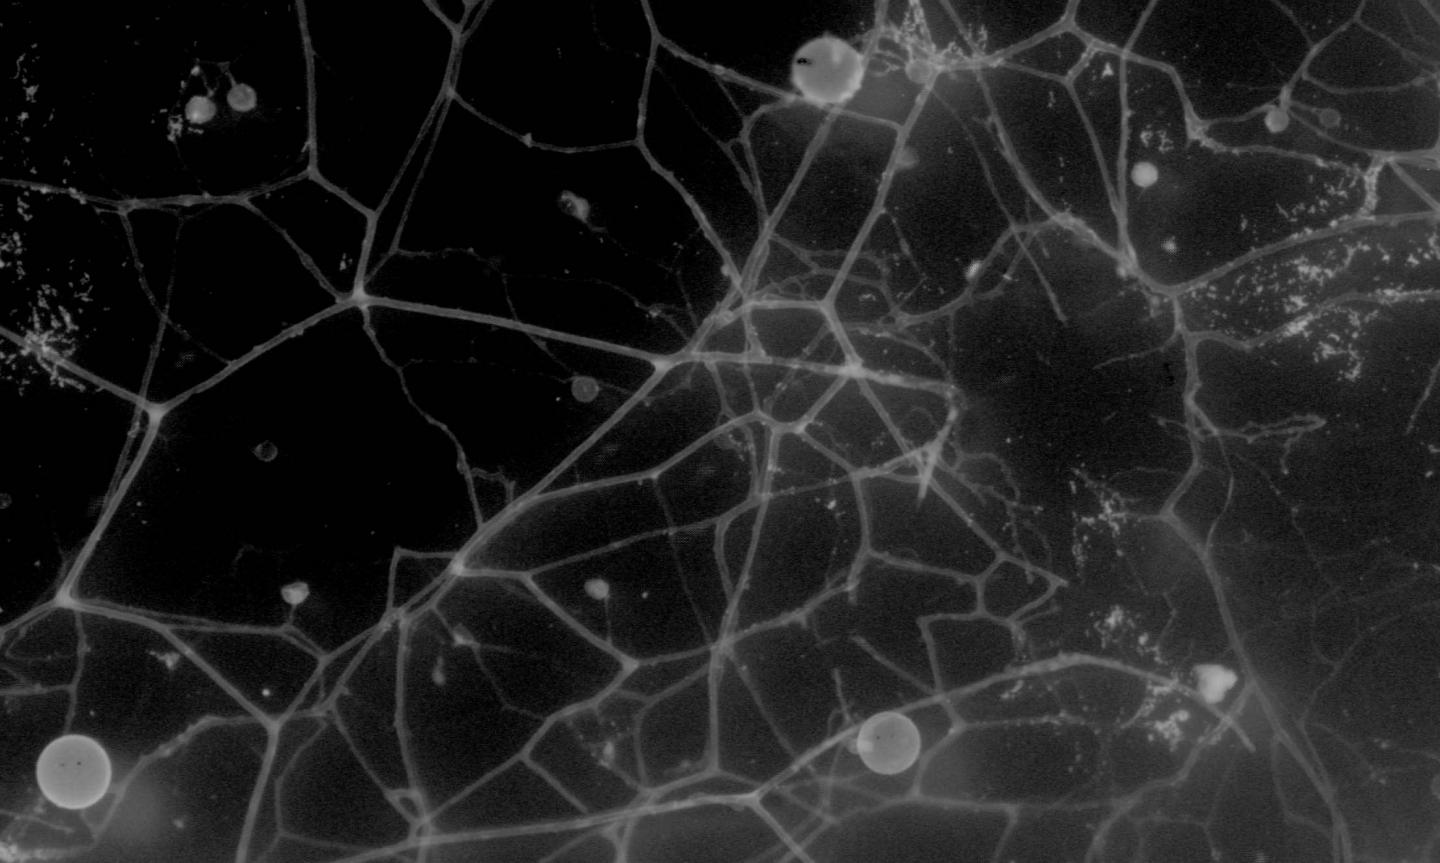 B&W microscopic image of AM fungal hyphae